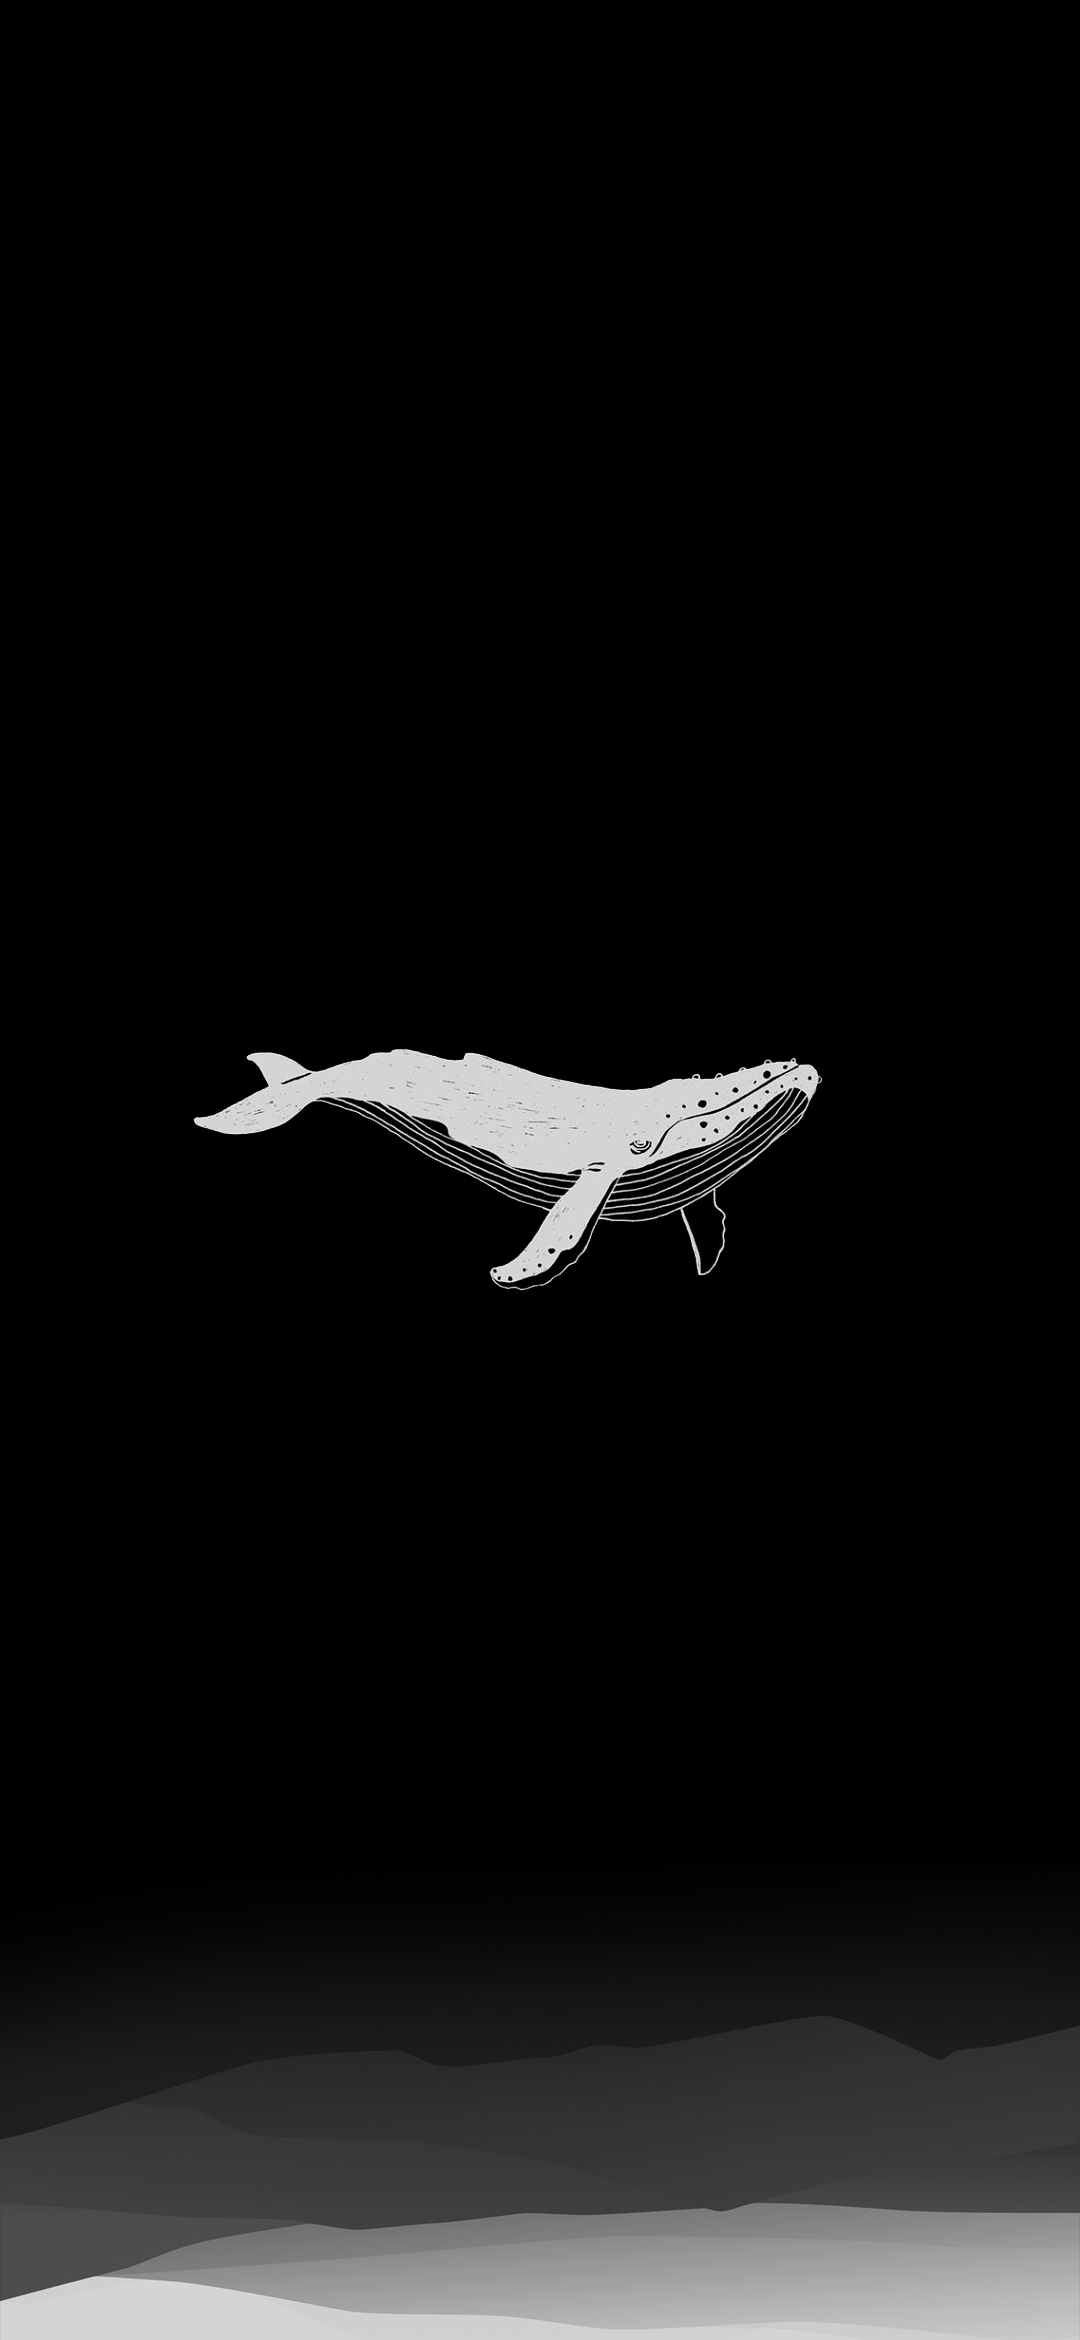 Wallpaper AMOLED Whale